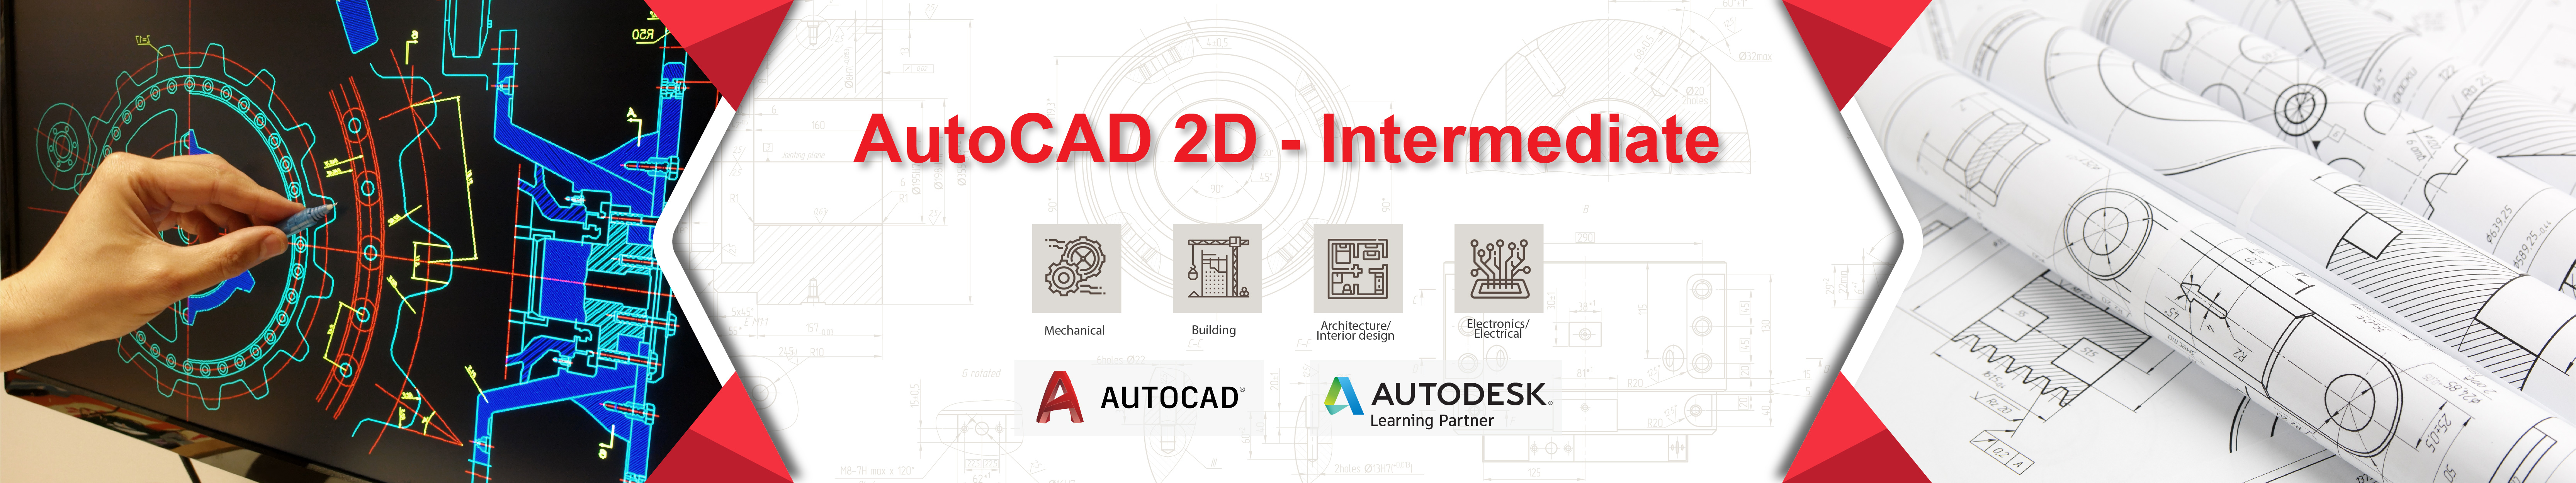 AutoCAD 2D - Intermediate